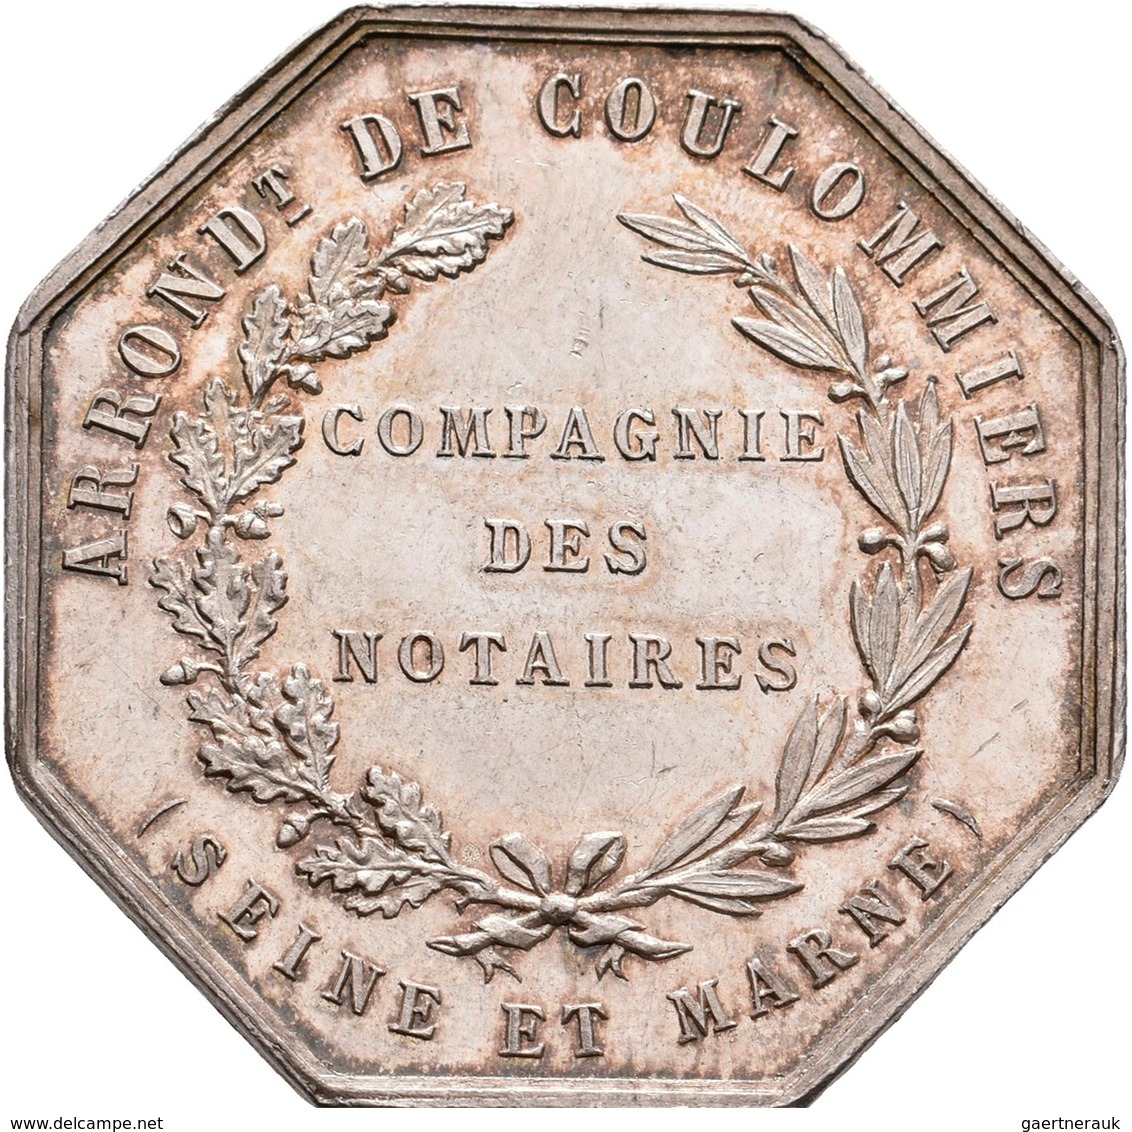 Medaillen alle Welt: Frankreich: Lot 6 Silbermedaillen; Lyon o. J. - Dispensaire General de Lyon fon